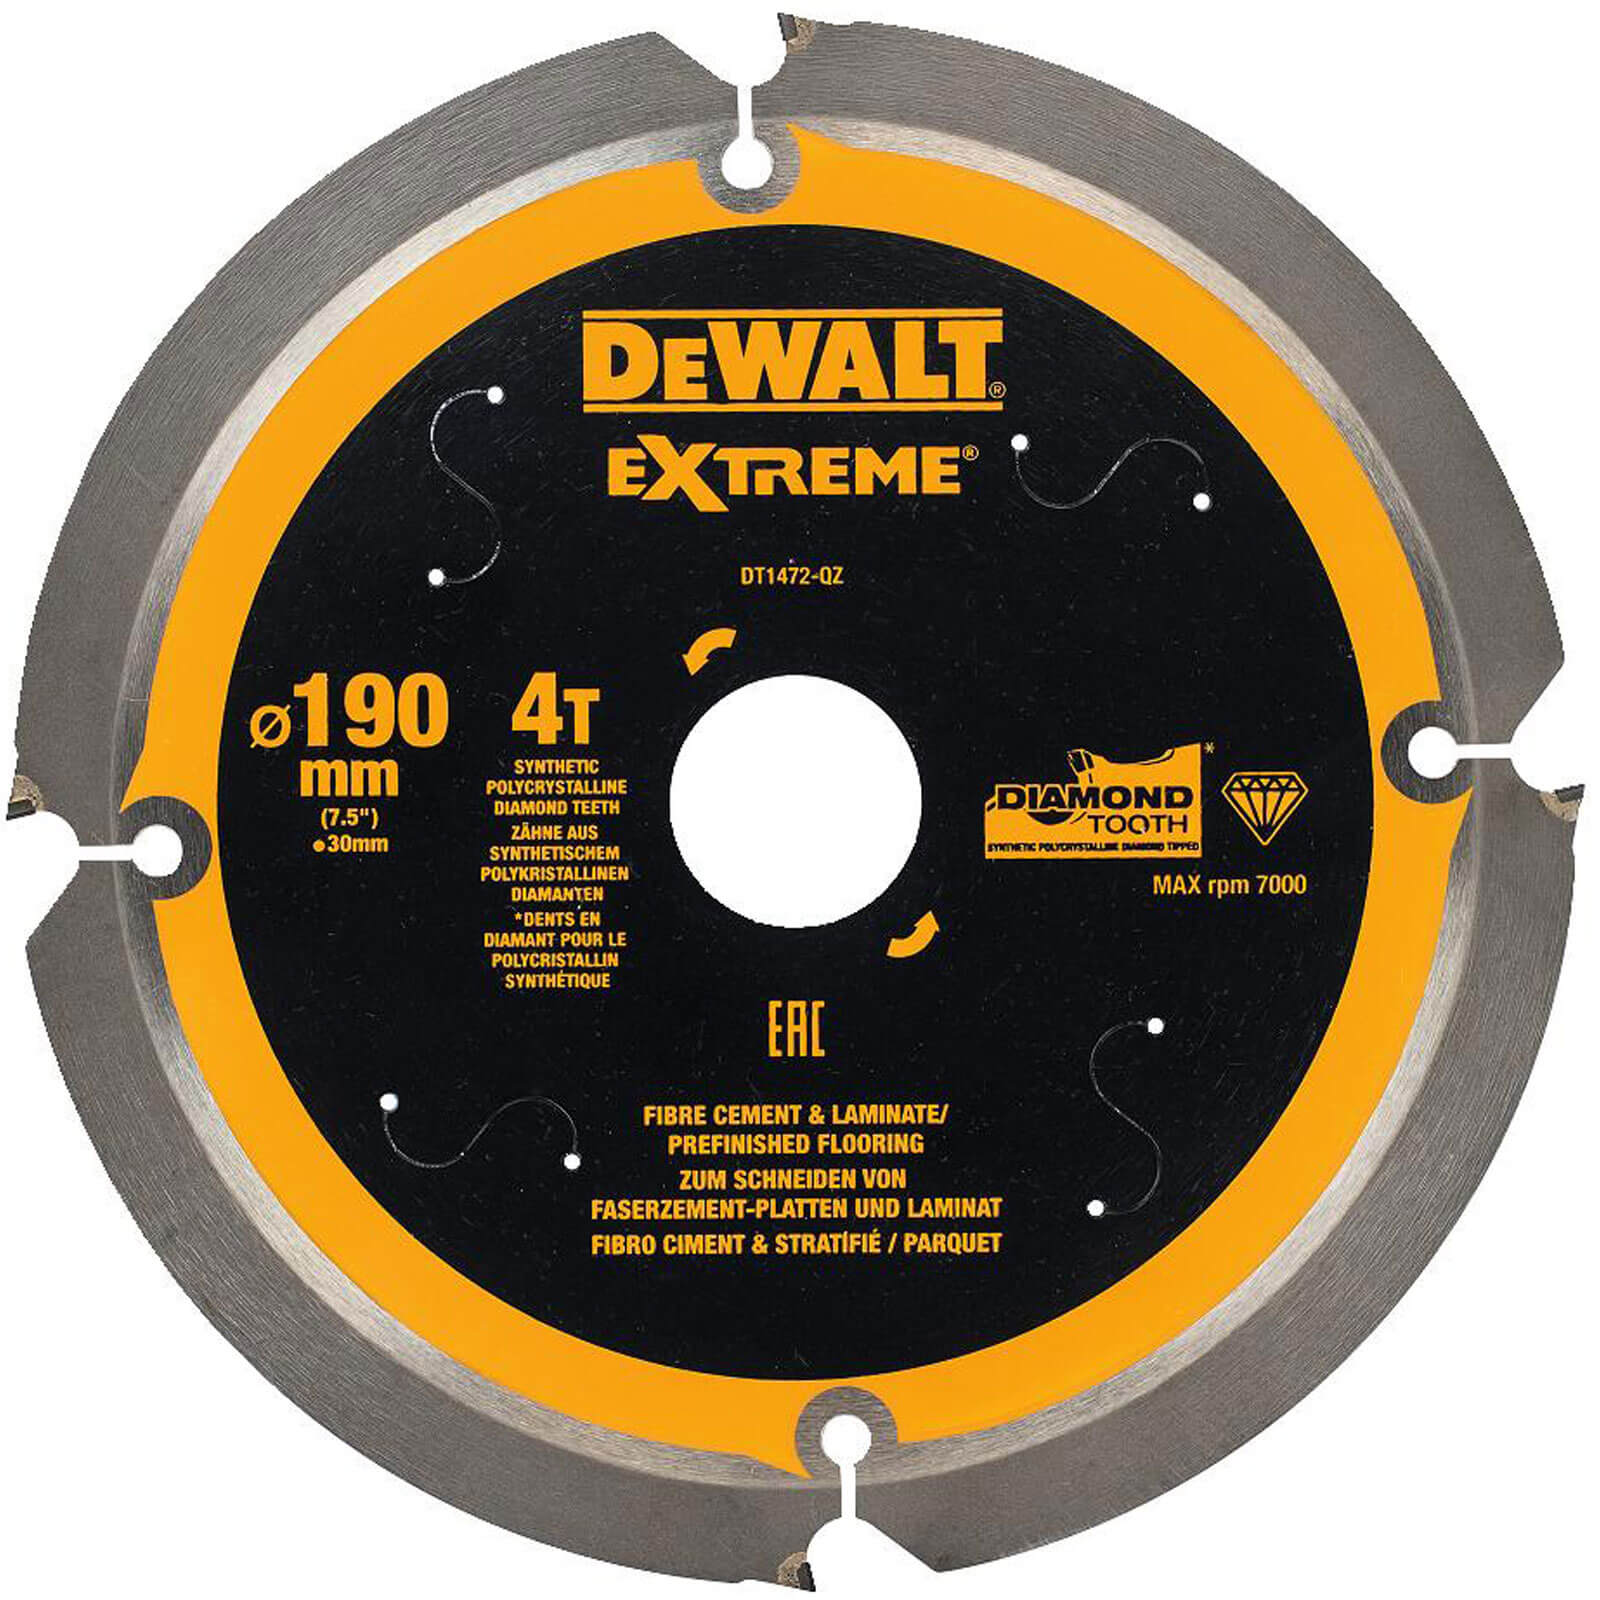 Photo of Dewalt Pcd Fibre Cement Saw Blade 190mm 4t 30mm